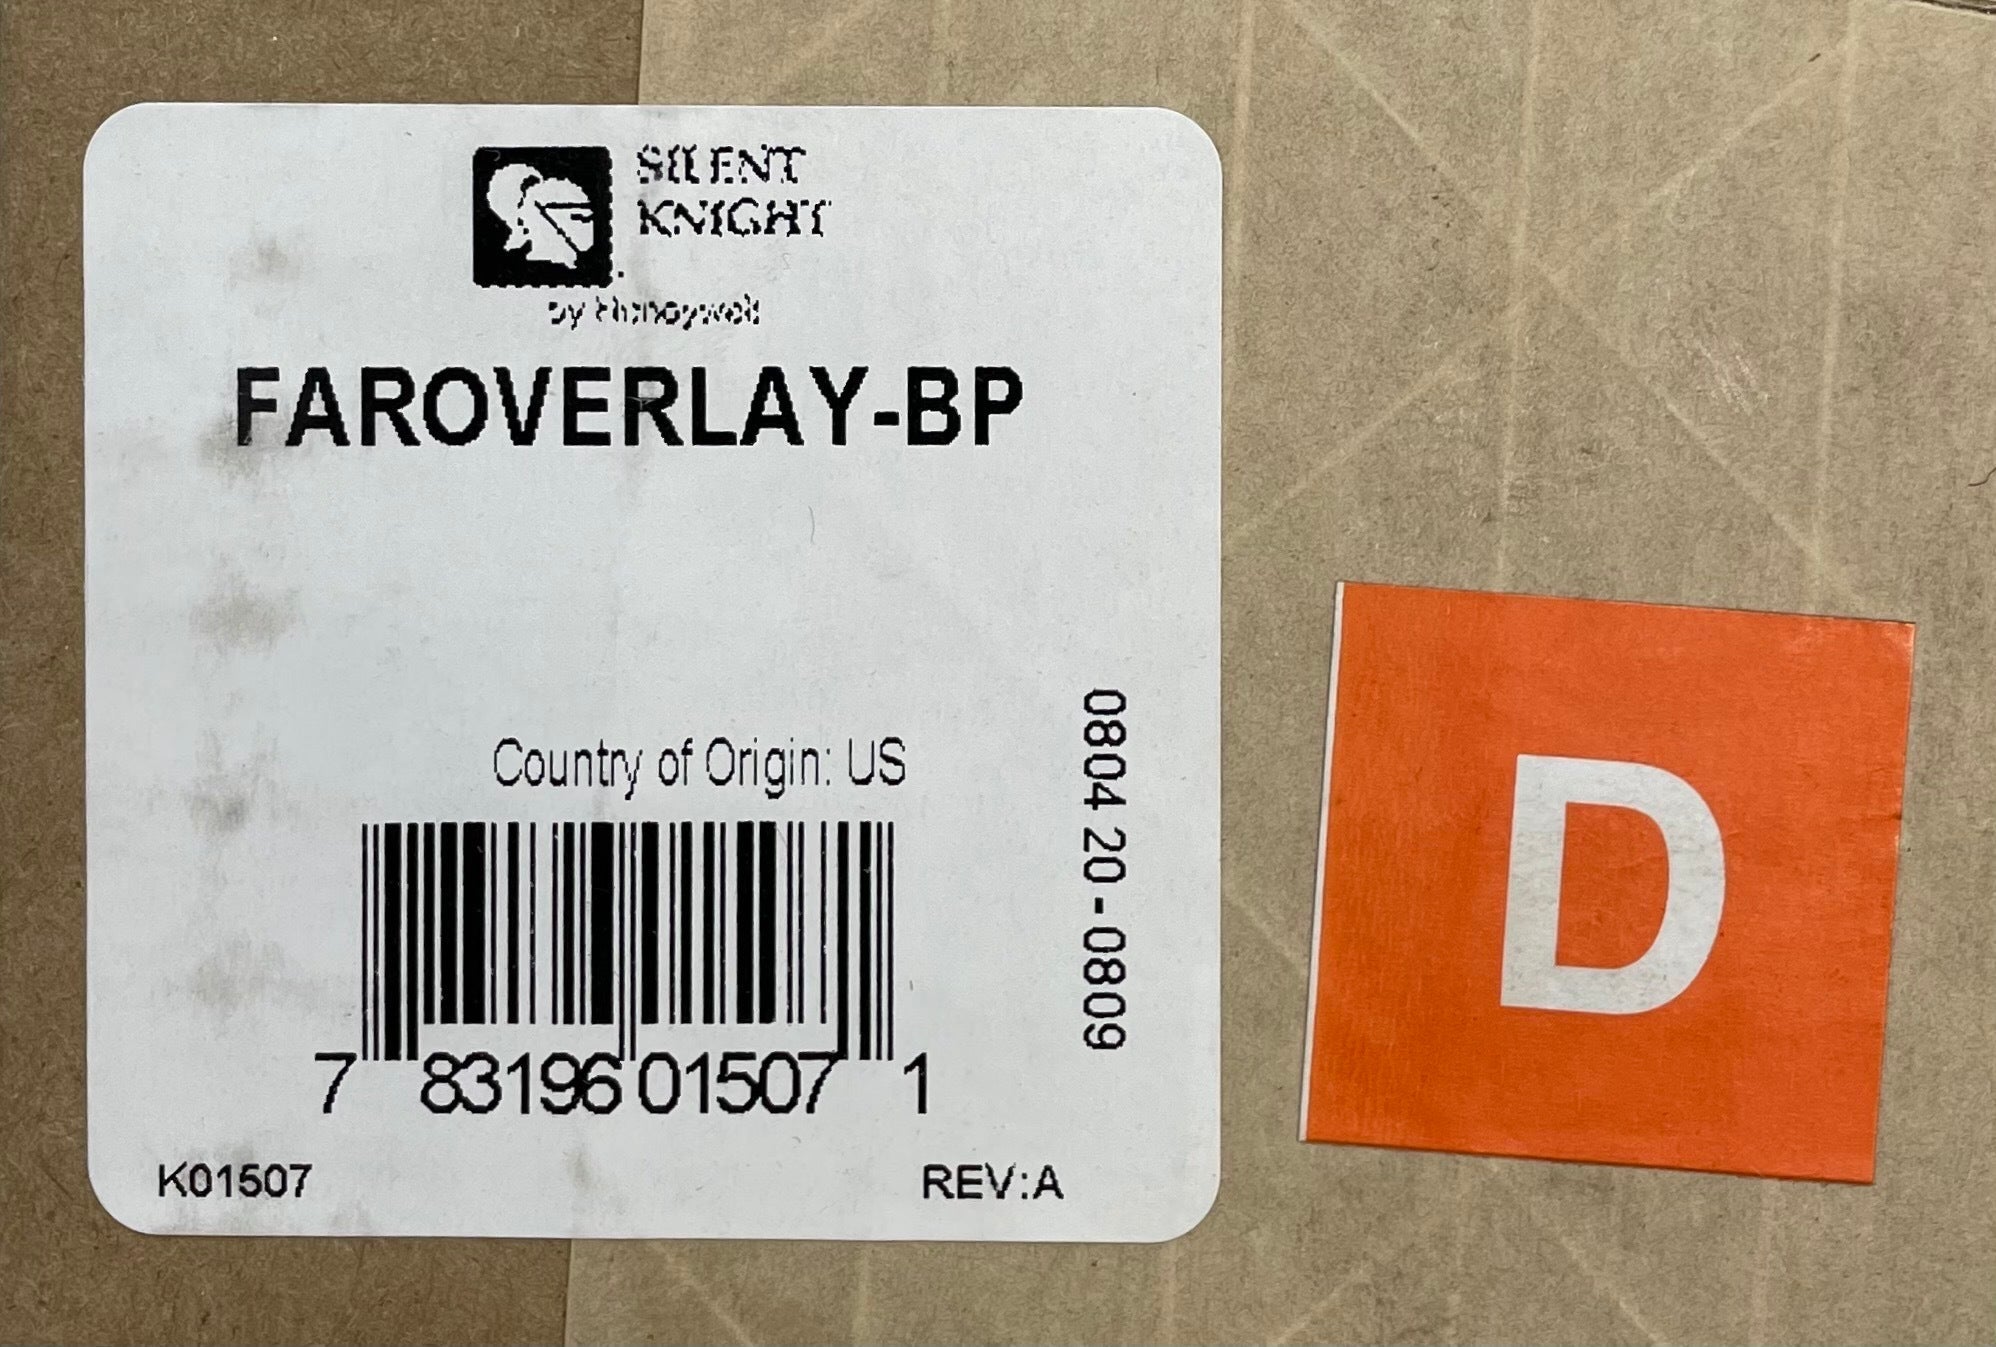 Silent Knight FAROVERLAY-BP - The Fire Alarm Supplier